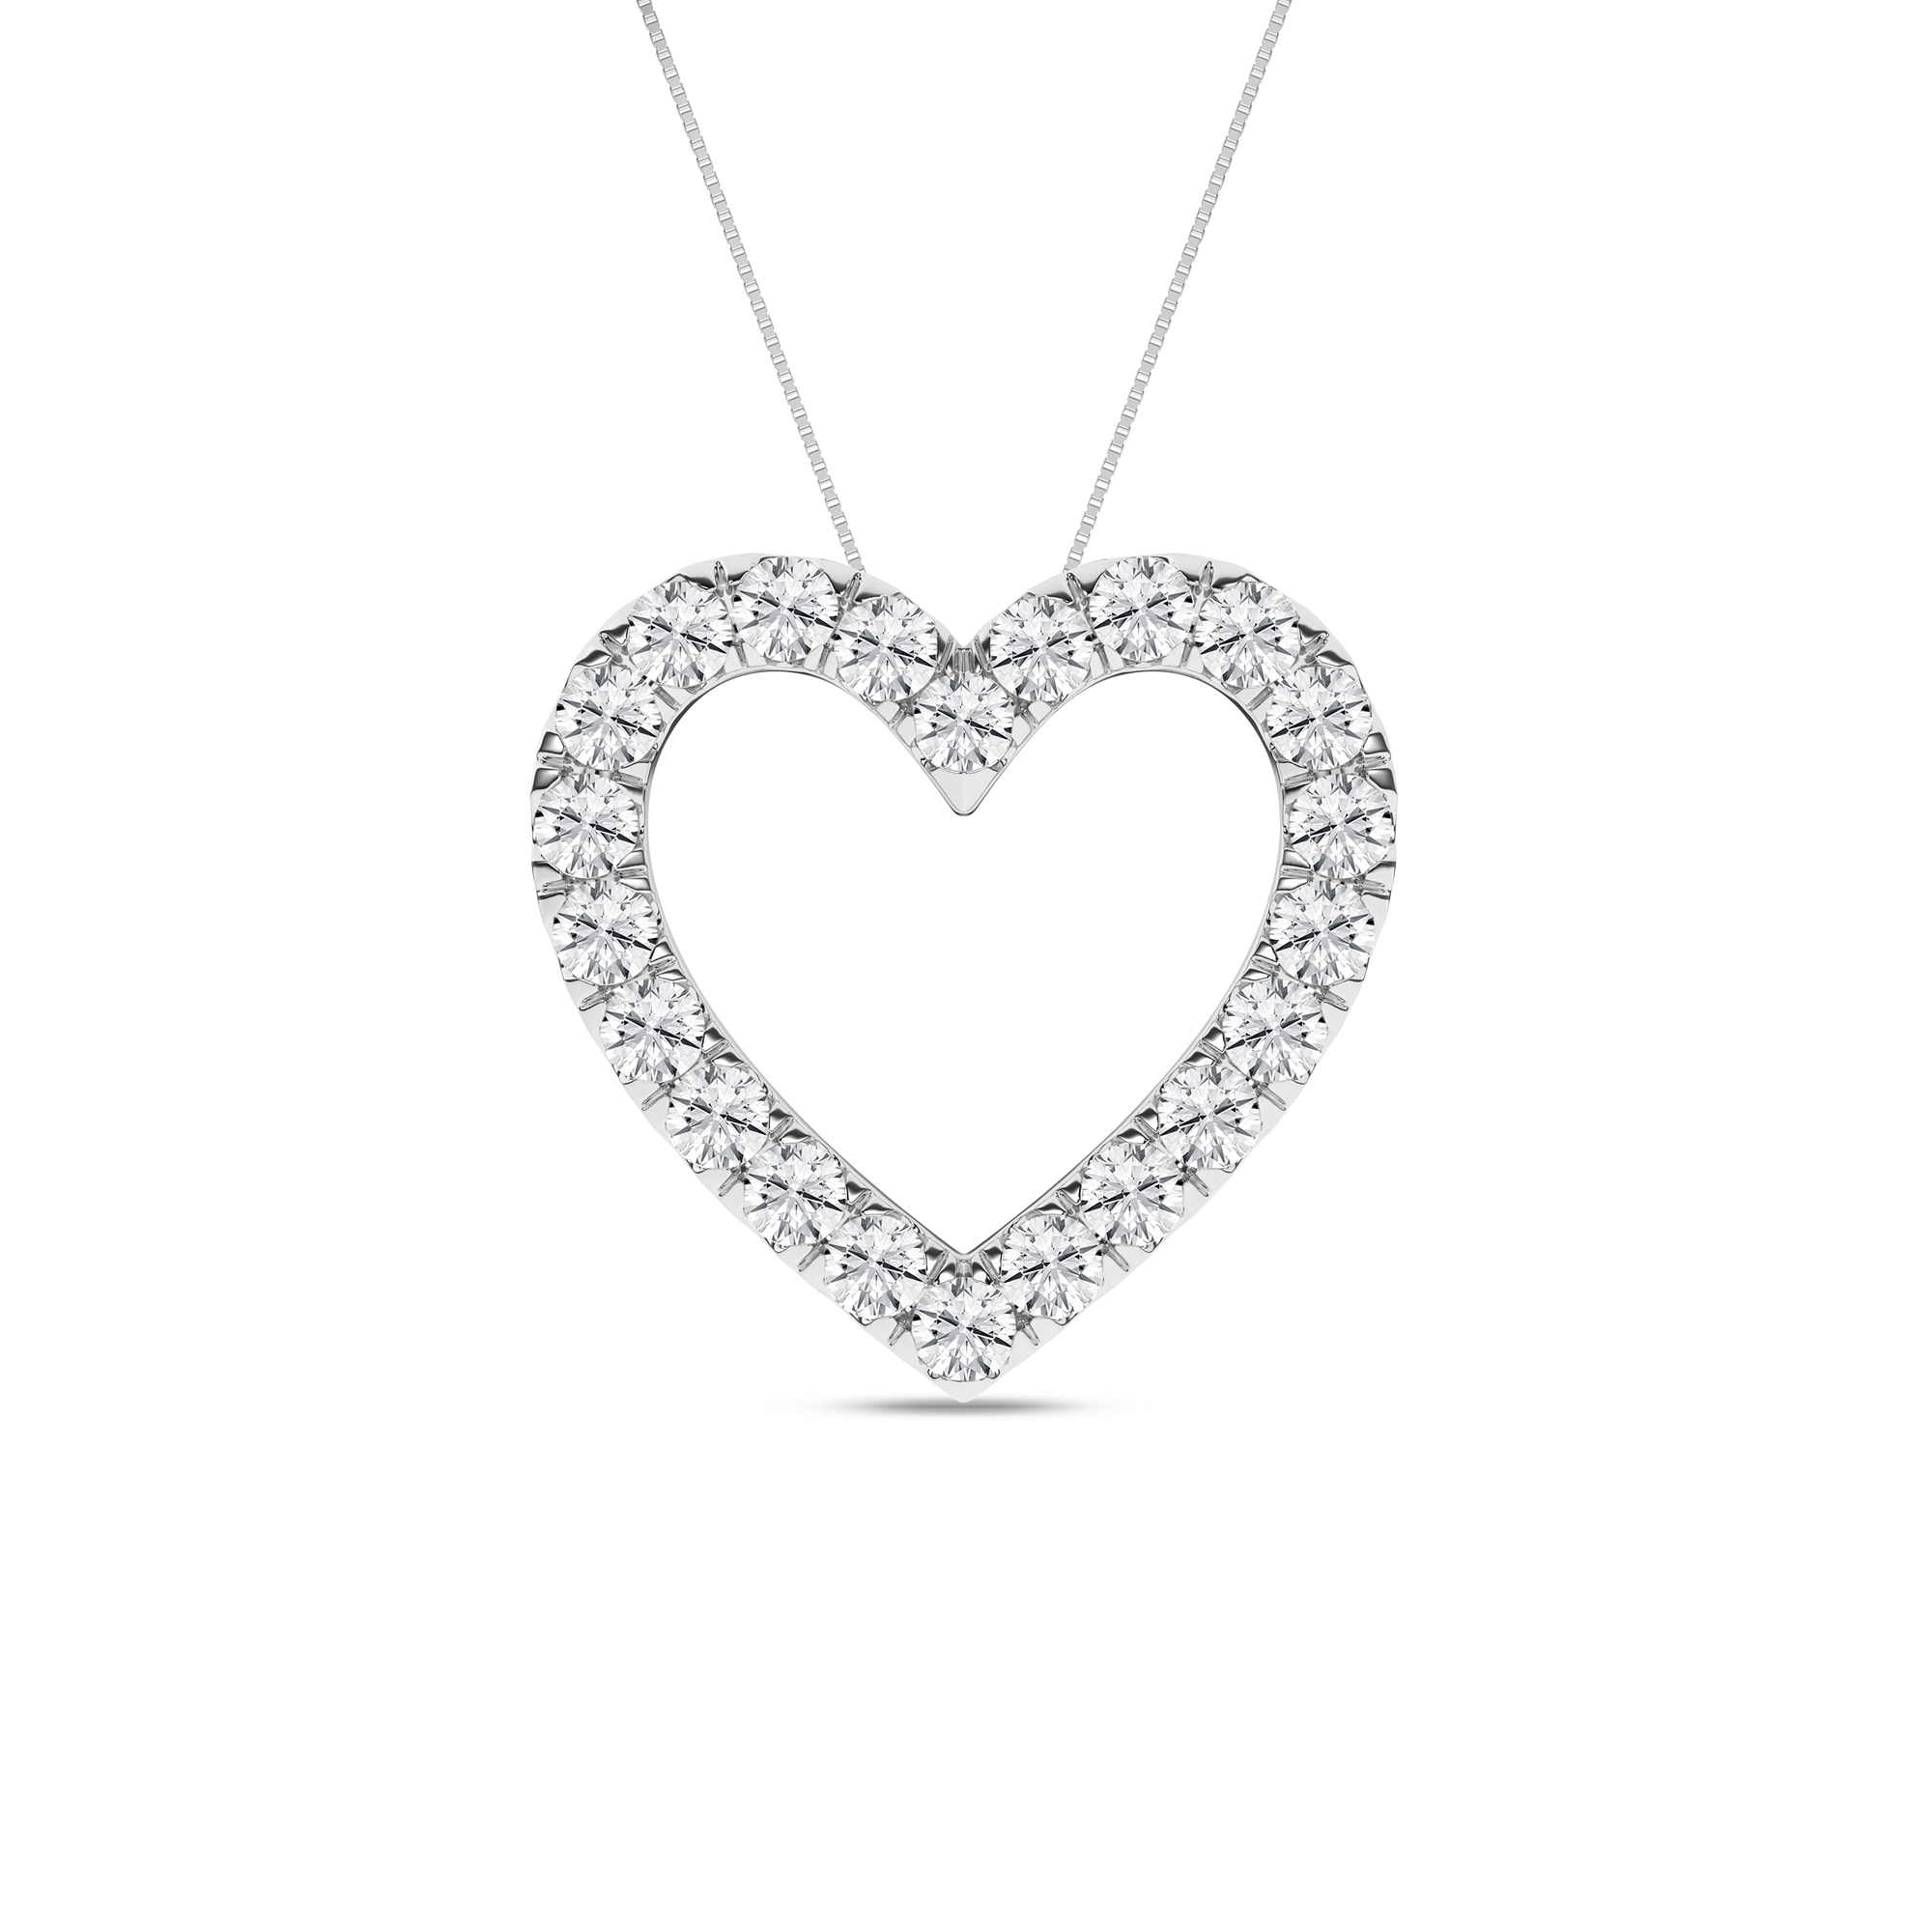 1ct. Diamond Heart Pendant